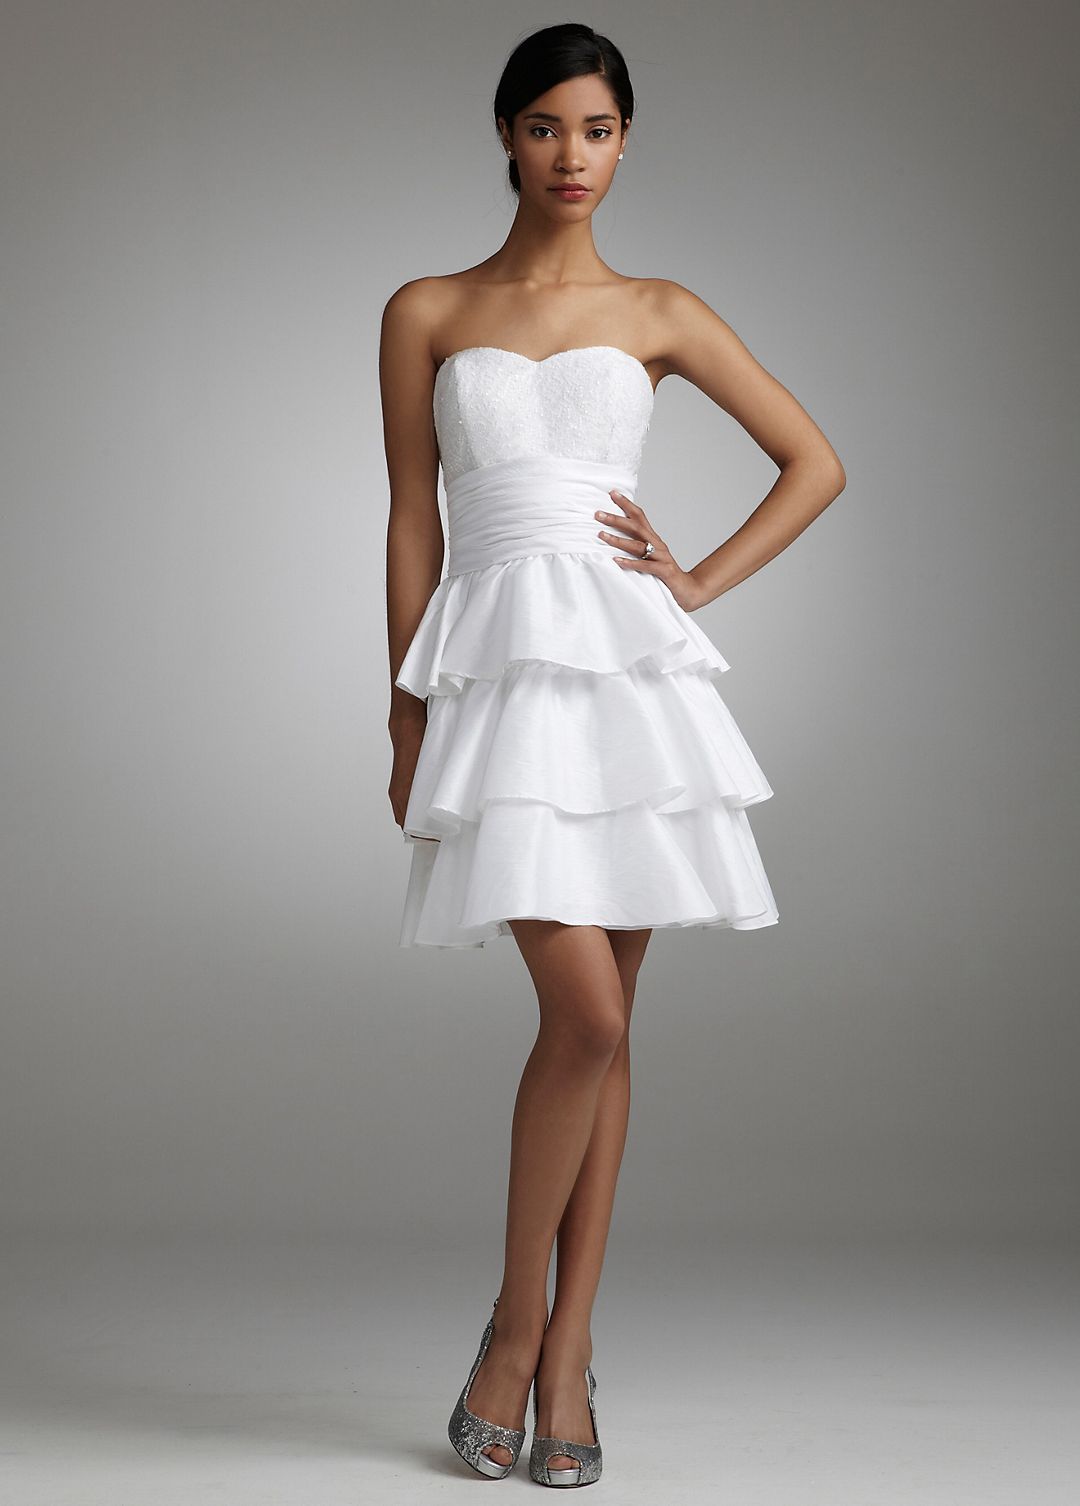 Short Strapless Taffeta Dress with Ruffled Skirt Image